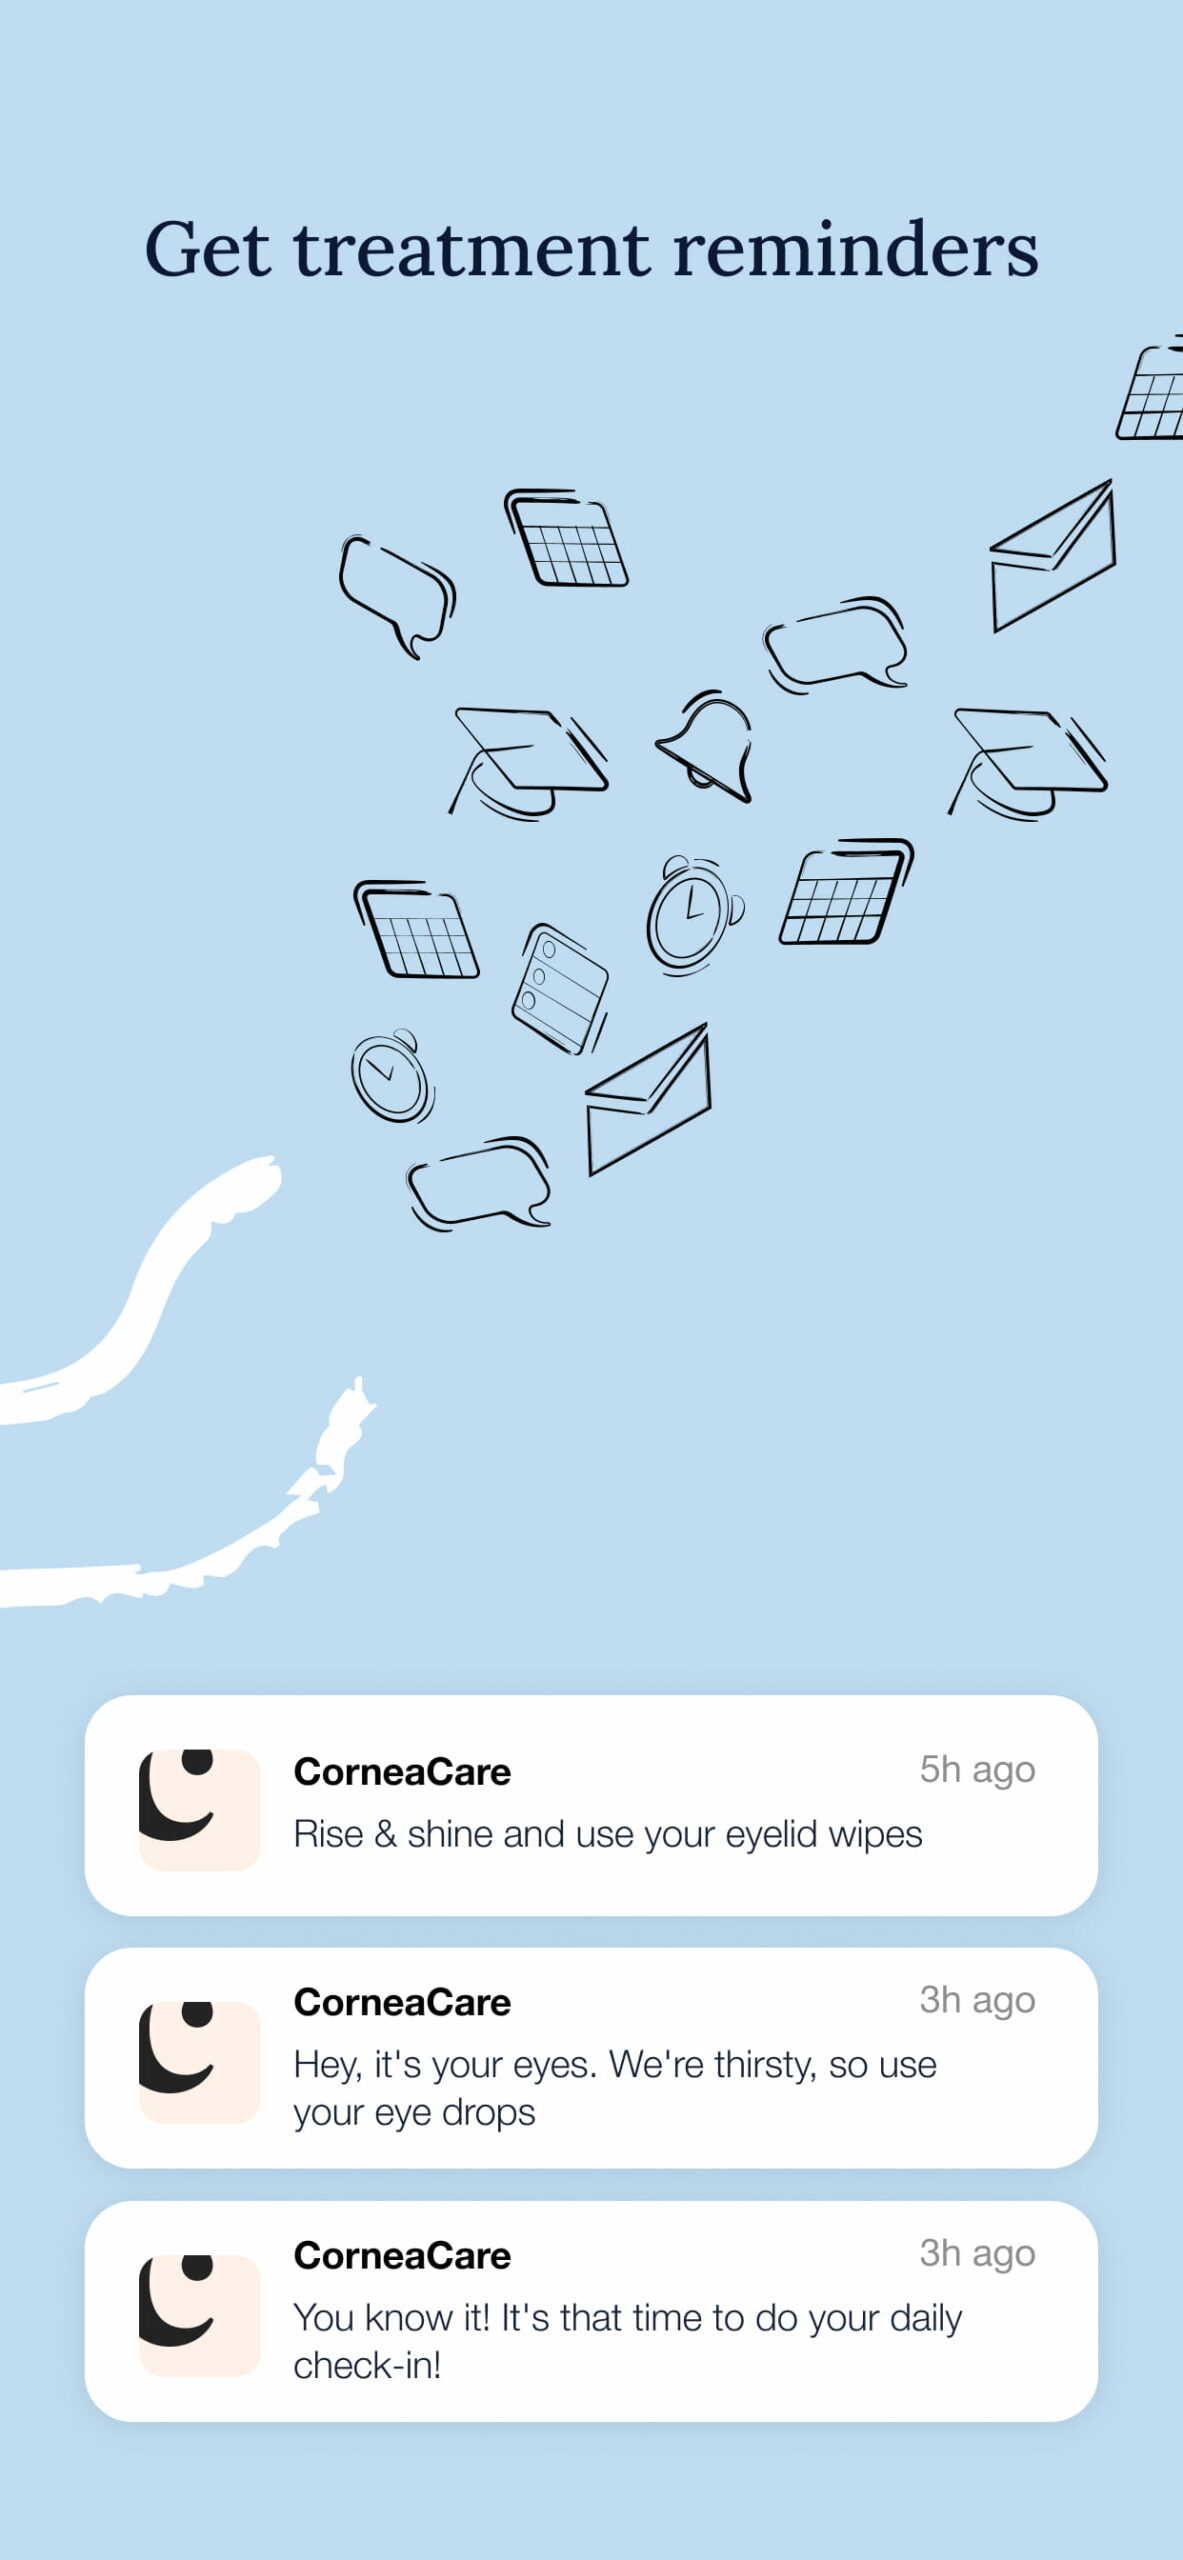 corneacare-app-treatment-reminders-scaled.jpg